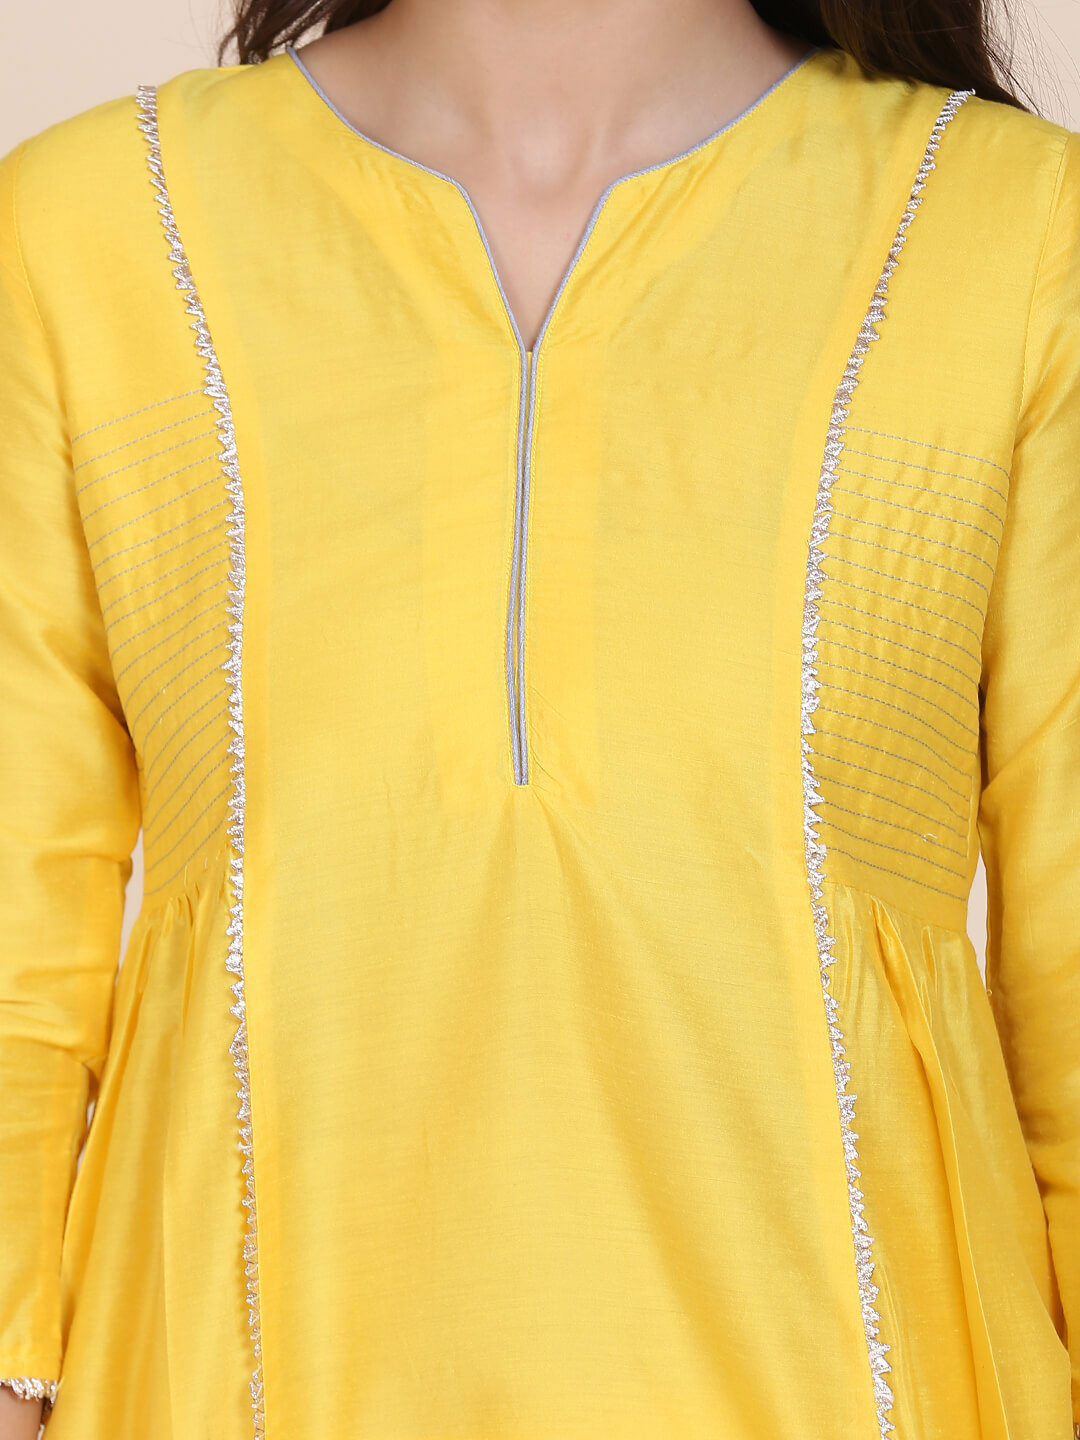 Abhsihti cotton silk kurta with side gathers & contrast details